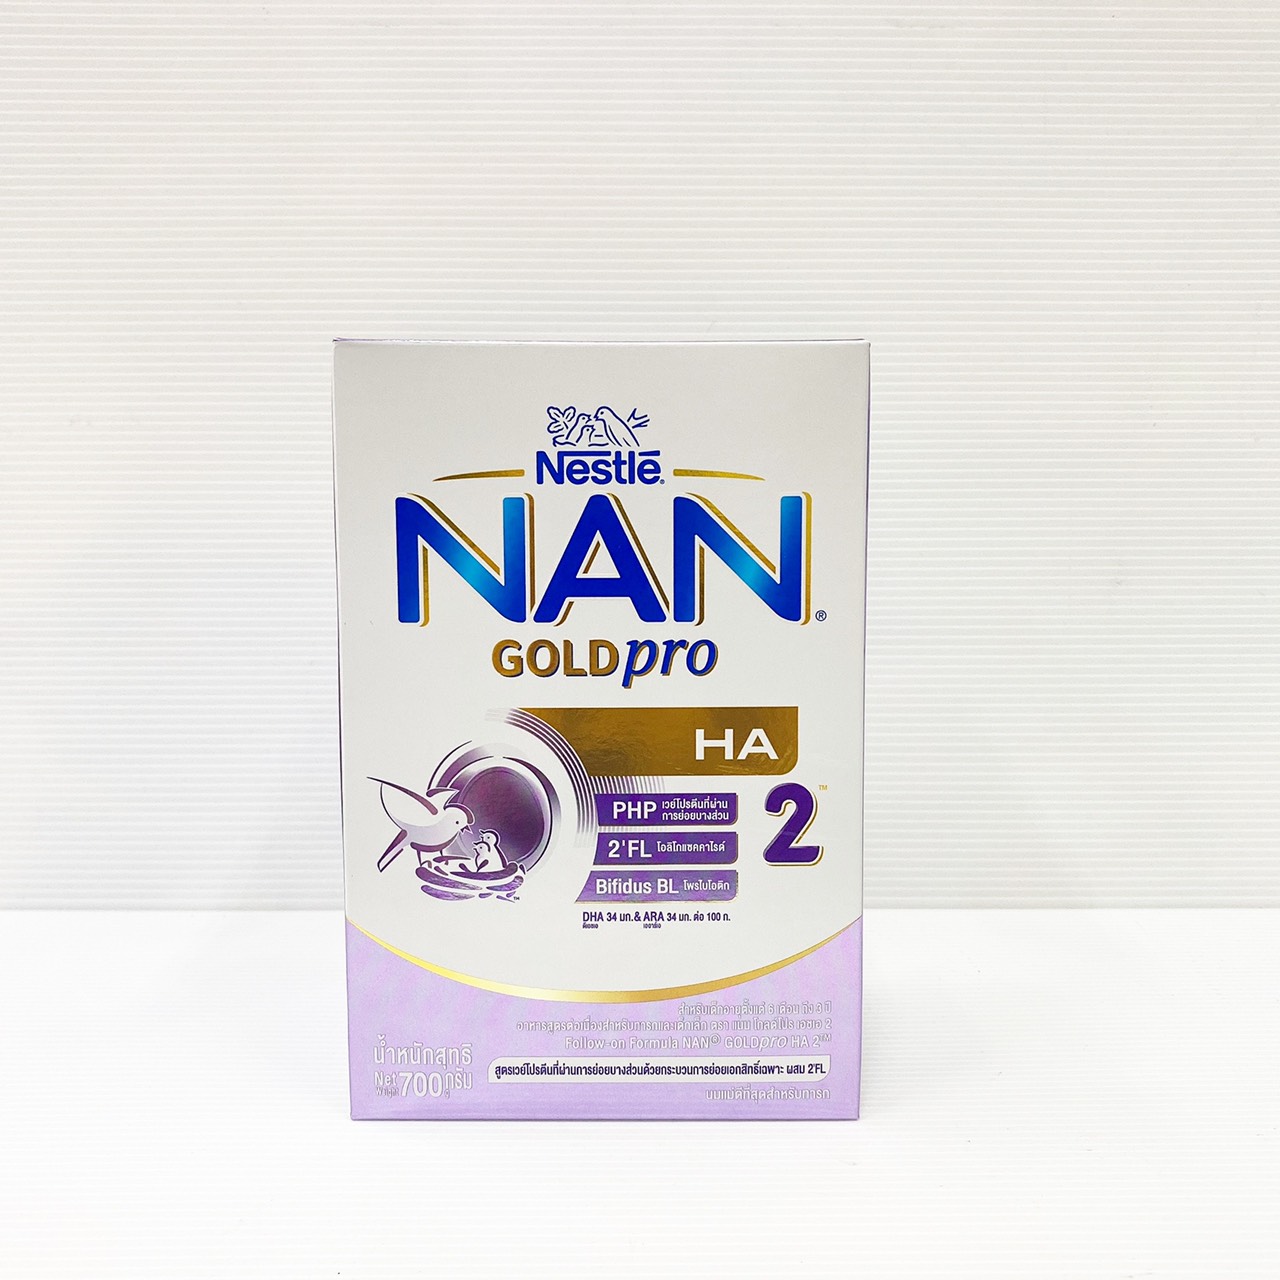 Nan 2 Goldpro H.A. นมแนน โกลด์โปร เอชเอ สูตร 2 ขนาด 700 กรัม หมดอายุ 17/02/2023